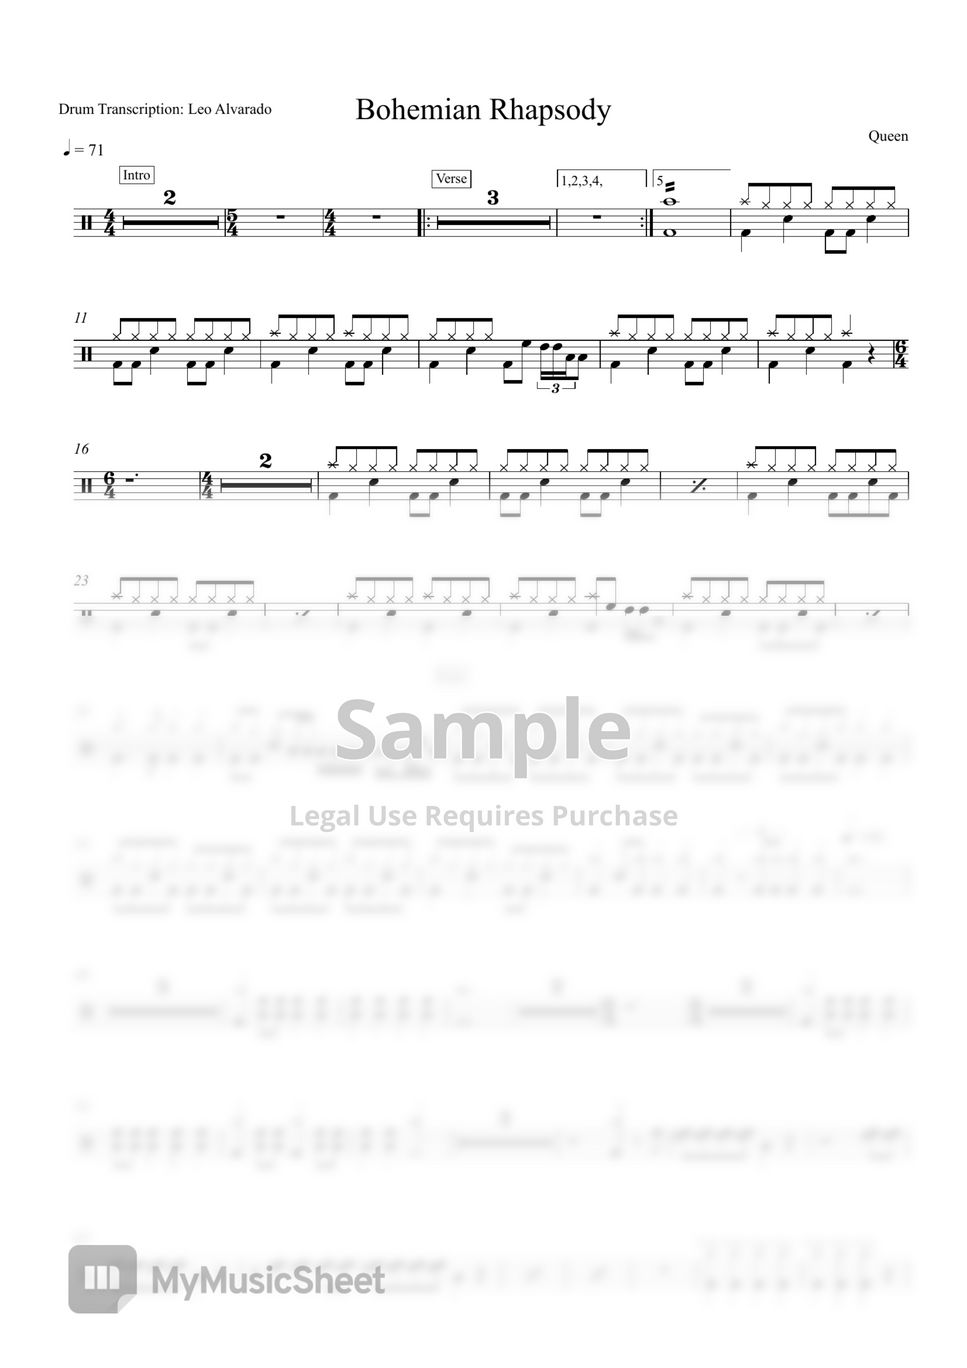 Queen - Bohemian Rhapsody Sheet by Drum Transcription: Leo Alvarado